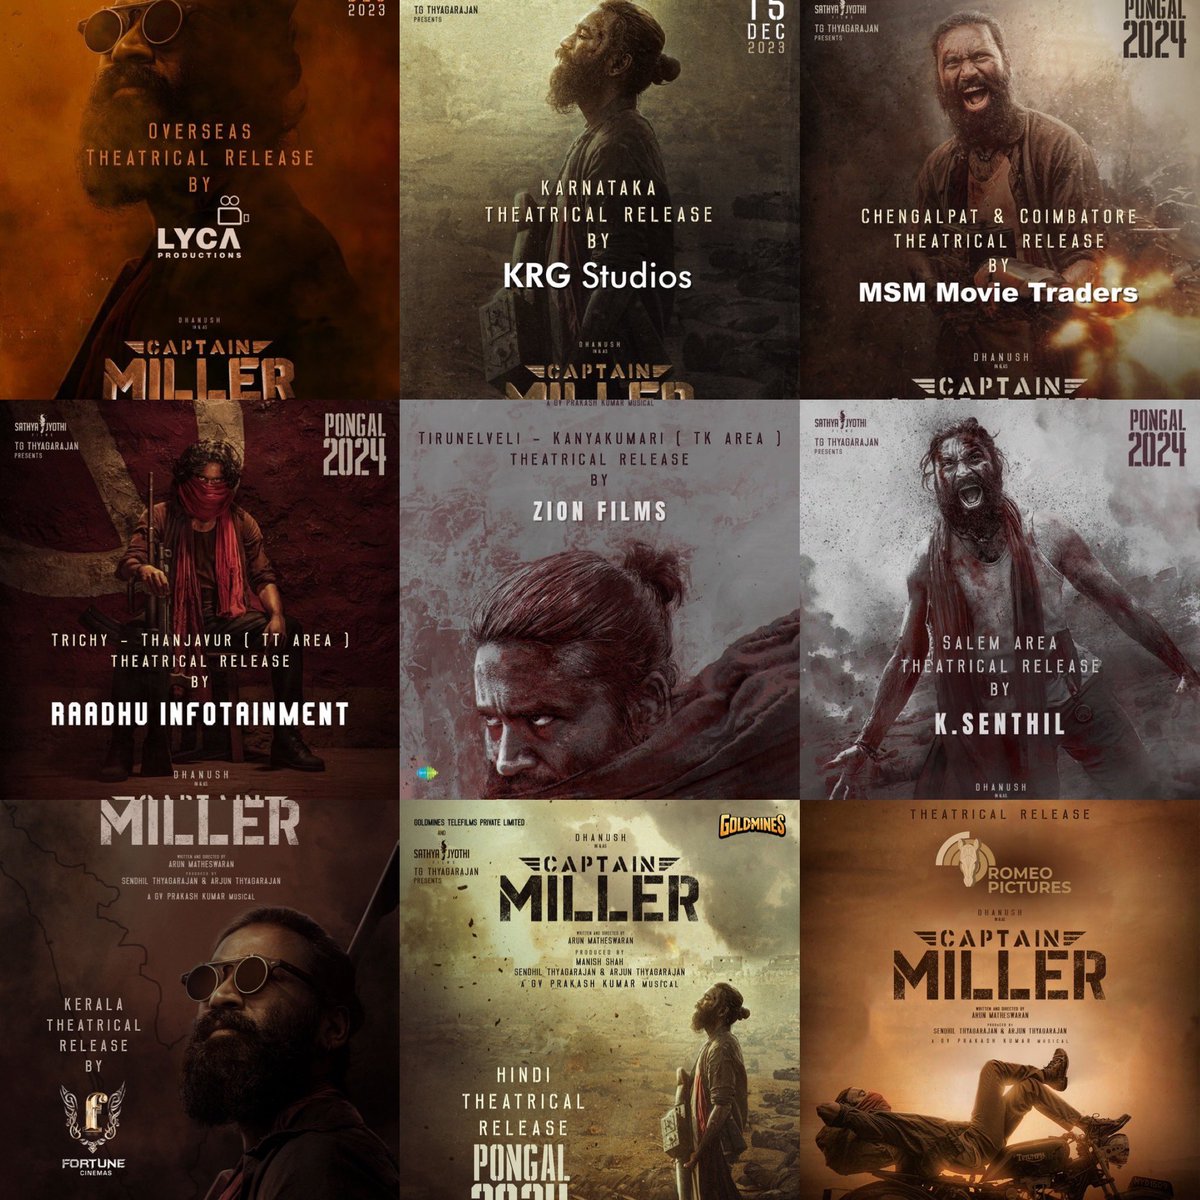 #CaptainMiller 

OS    -      Lyca
KA    -     KRG Studios
KL      -     Fortune Cinemas
Hindi -    Goldmines
TT  -         Raadhu Infotainment 
TK  -         Zion Films
Salem -   K.Senthil
MR -          Romeo Pictures
Chengalpet&CBE - MSM